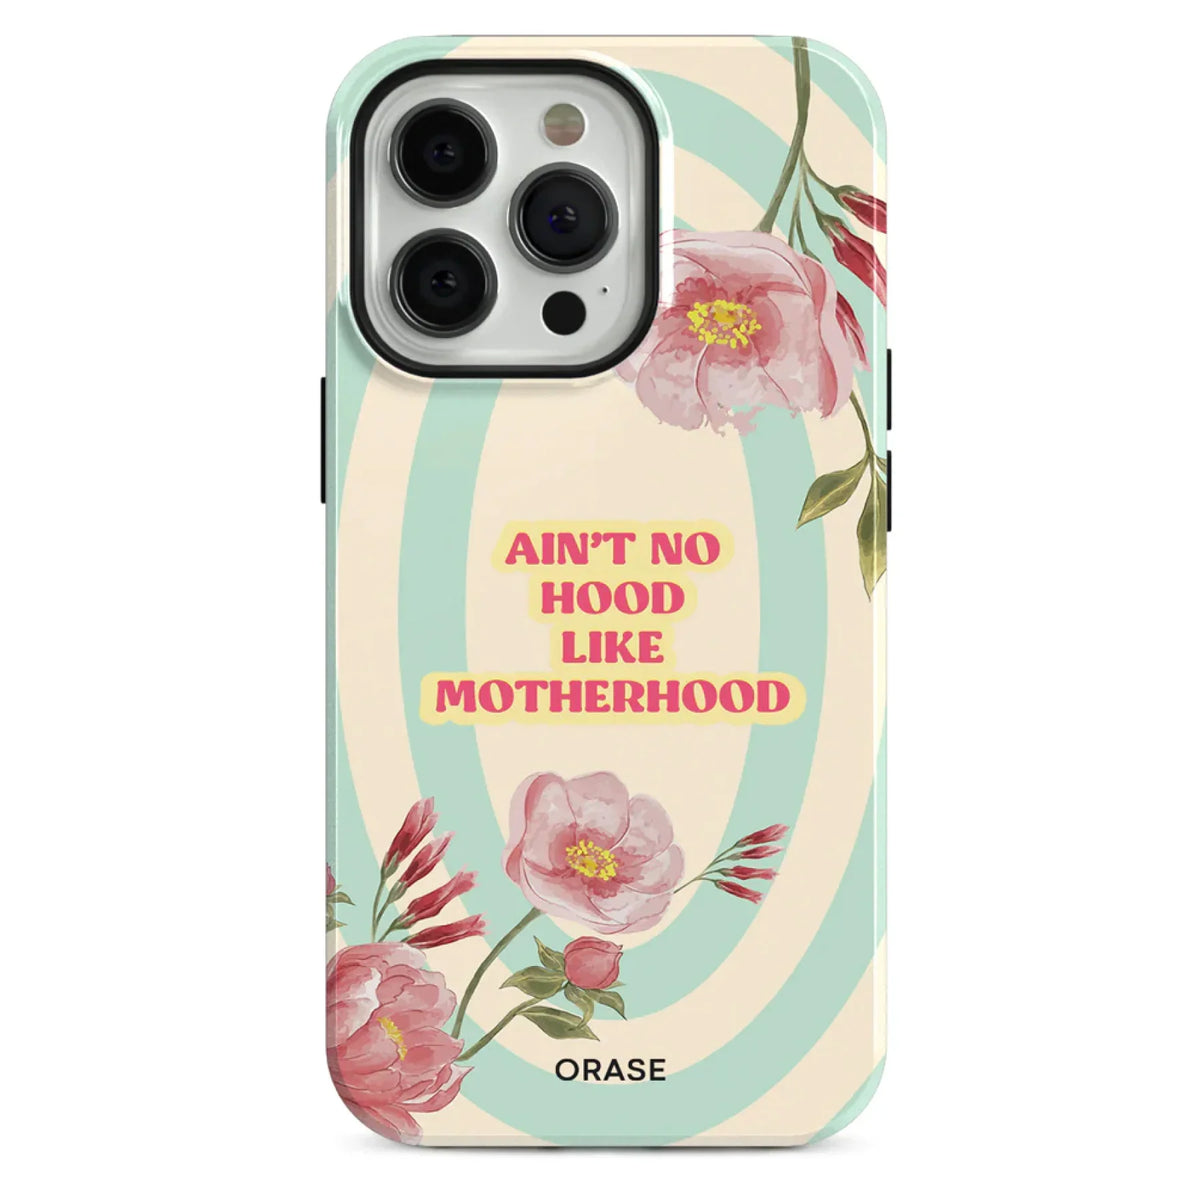 Ain't No Hood iPhone Case - iPhone 12 Mini